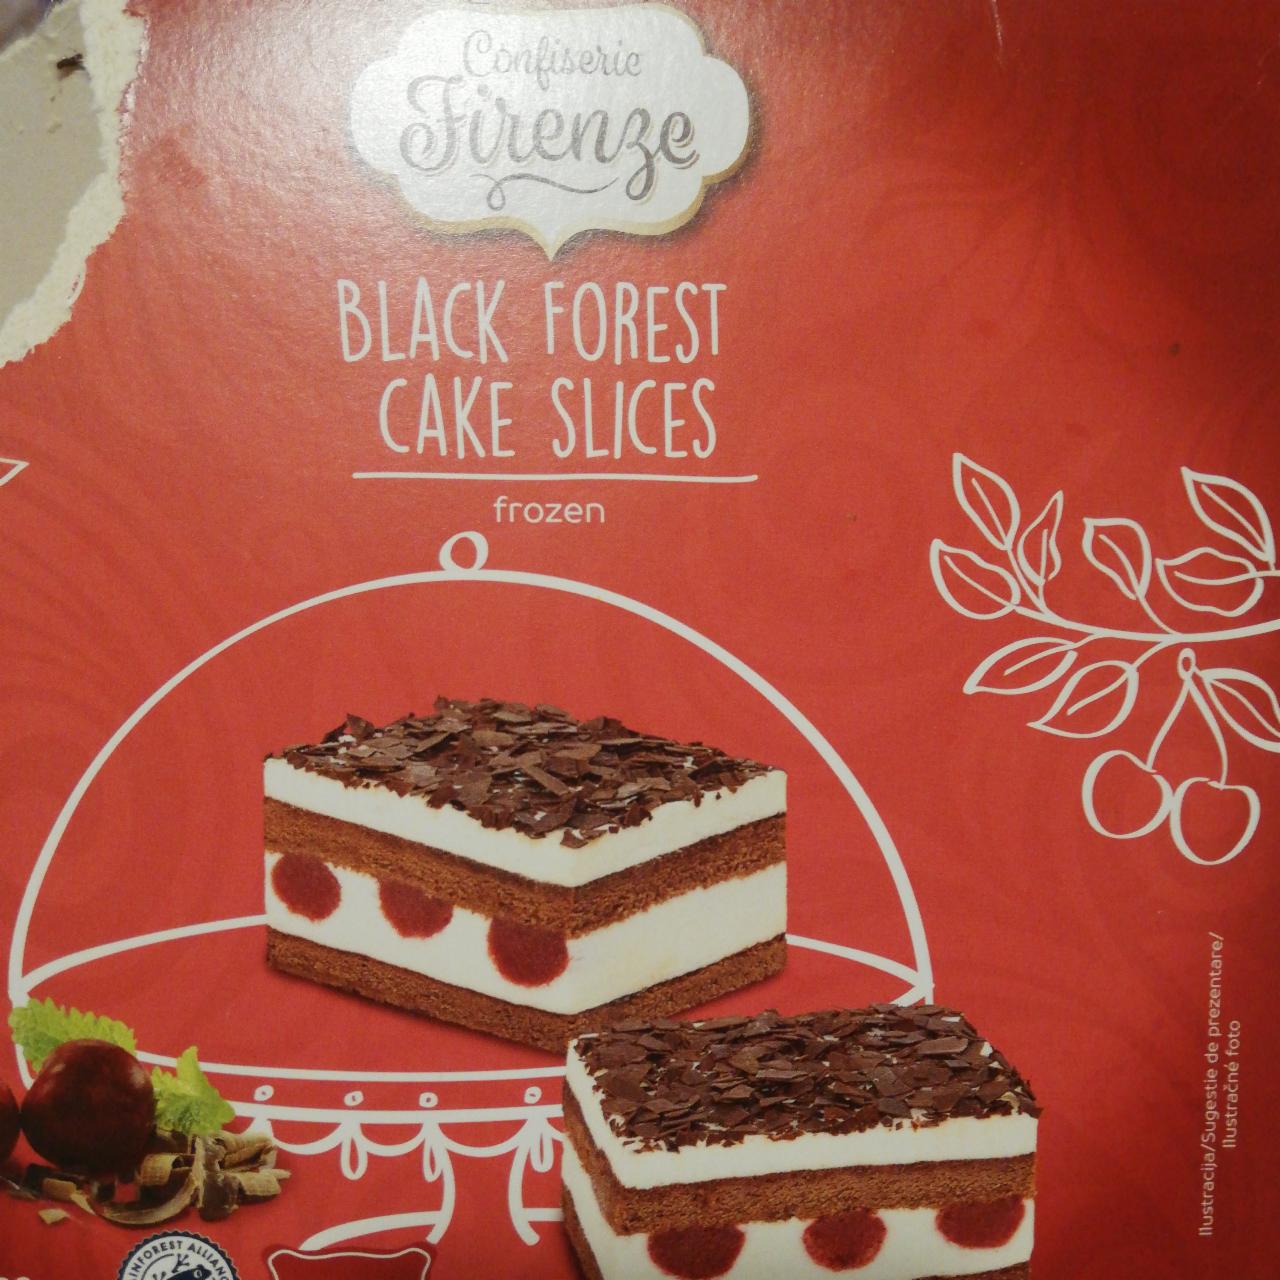 Fotografie - Black forest cake slices frozen Confiserie Firenze